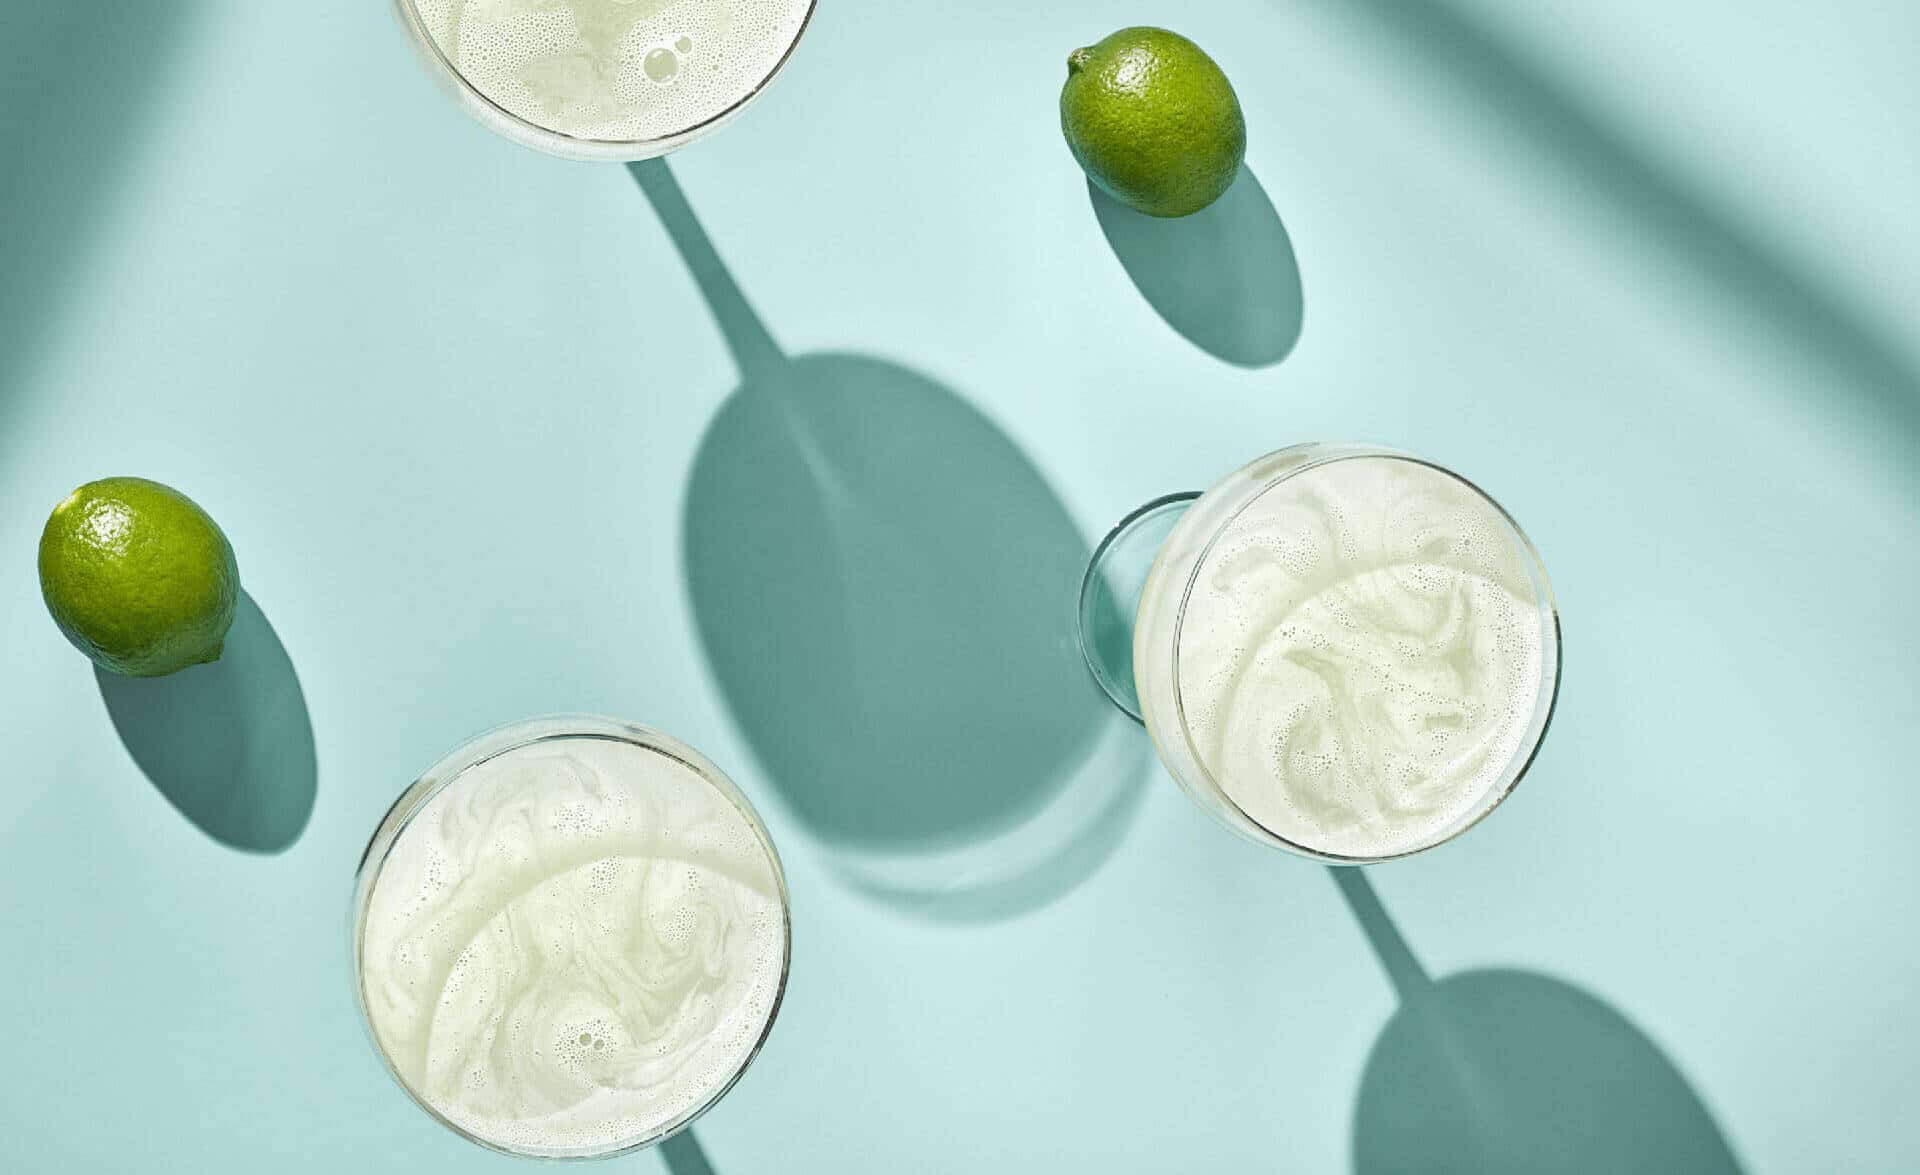 Ten To One White Rum Daiquiri and Limes